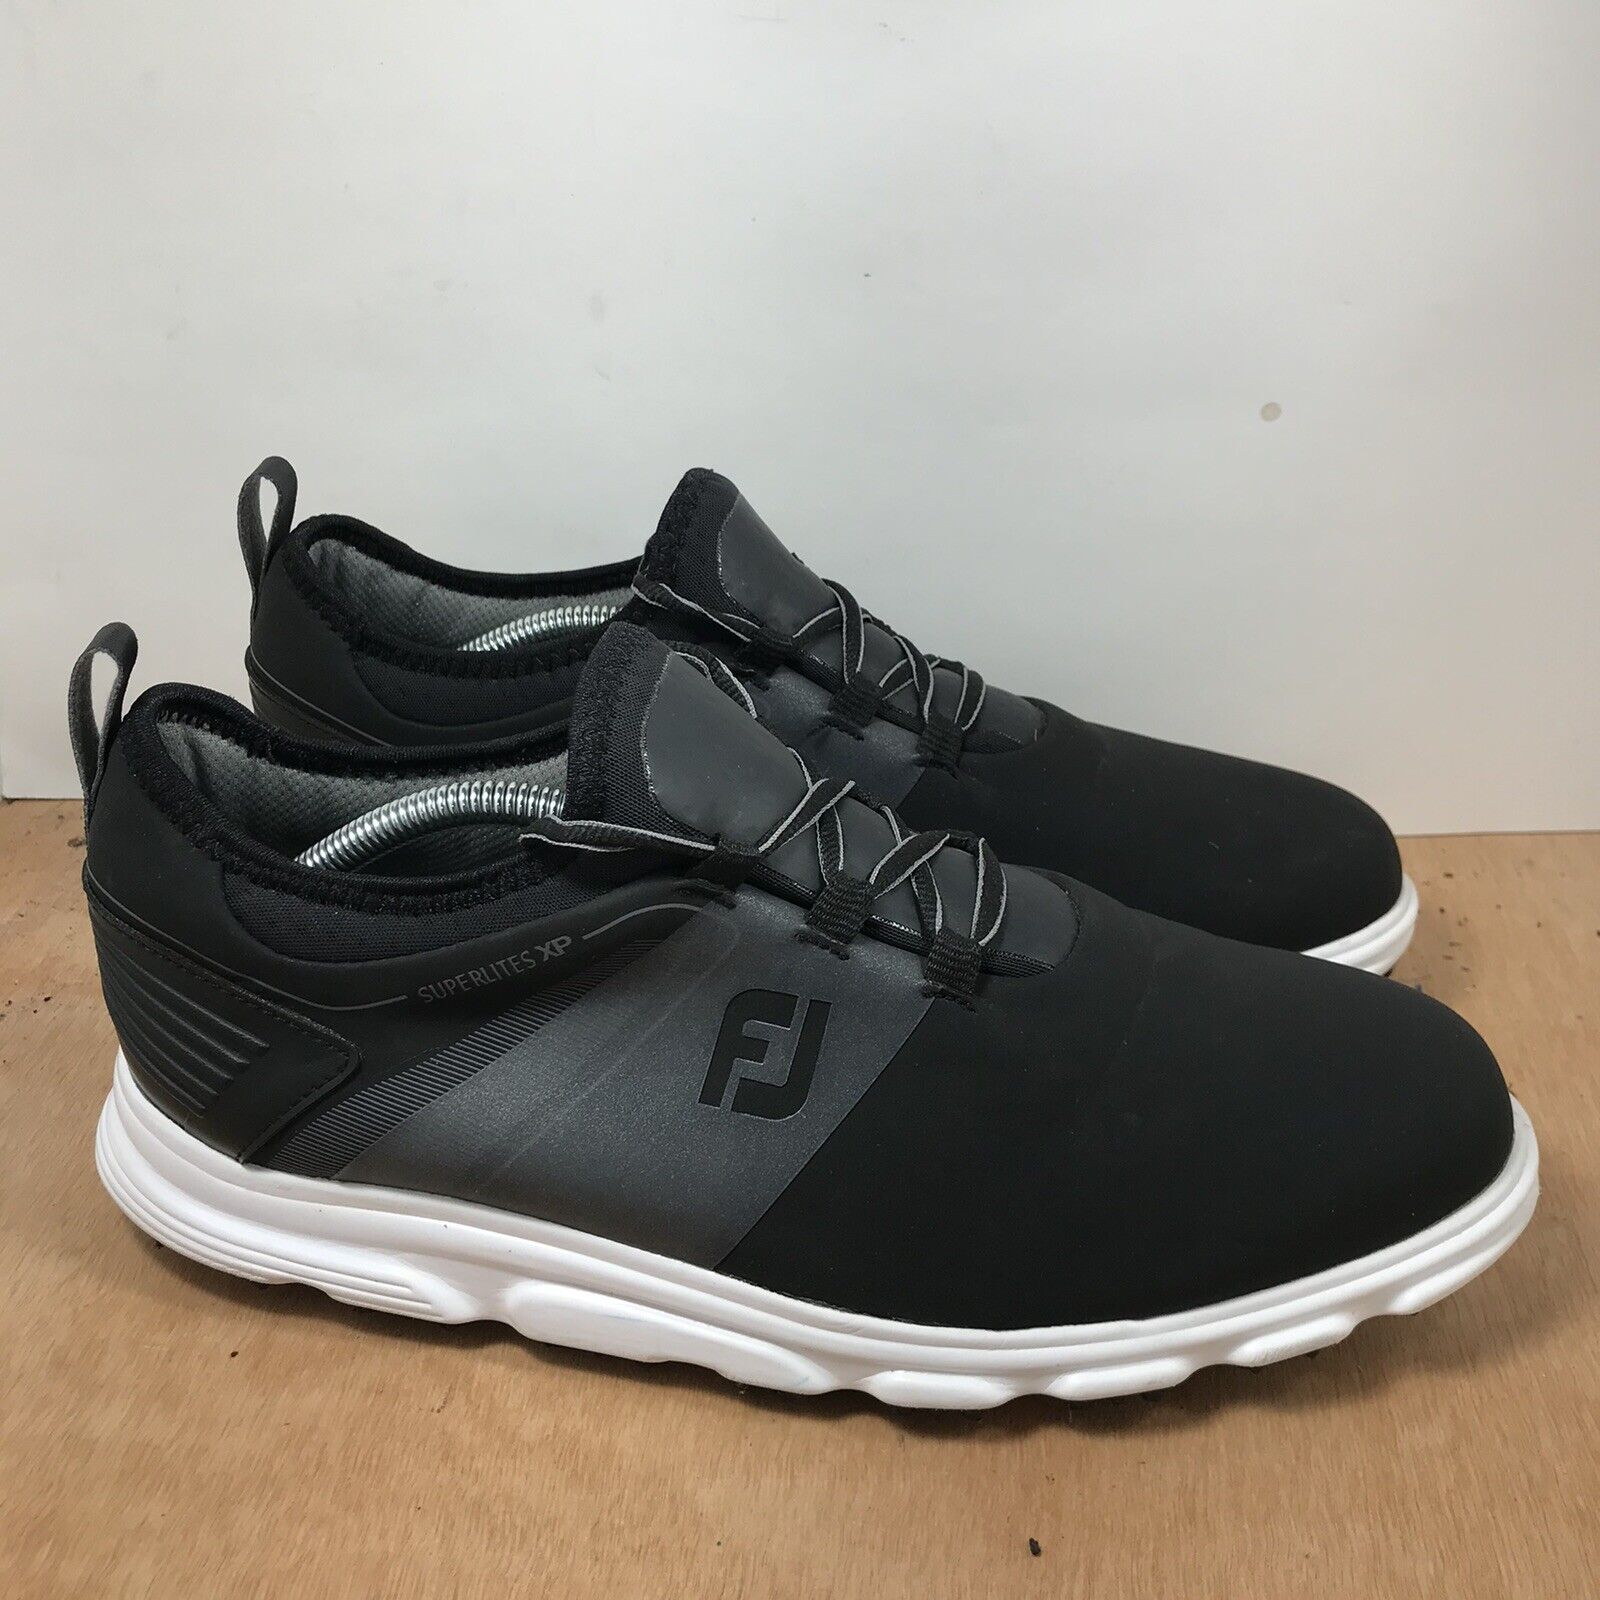 FootJoy Superlites XP Men\'s Size 11.5 M Black Model 58066 Spikeless Golf Shoes